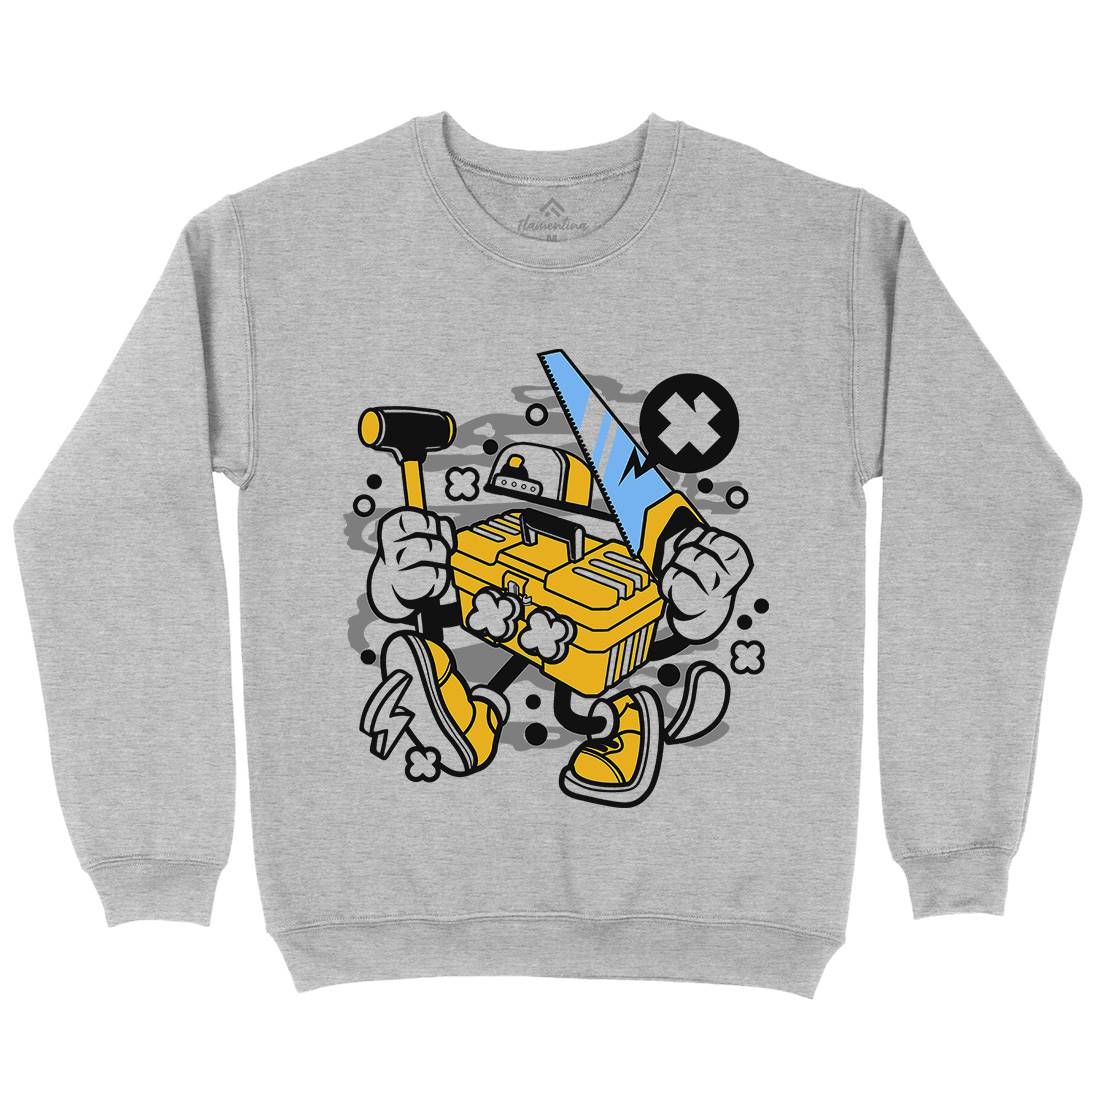 Tool Box Kids Crew Neck Sweatshirt Work C282